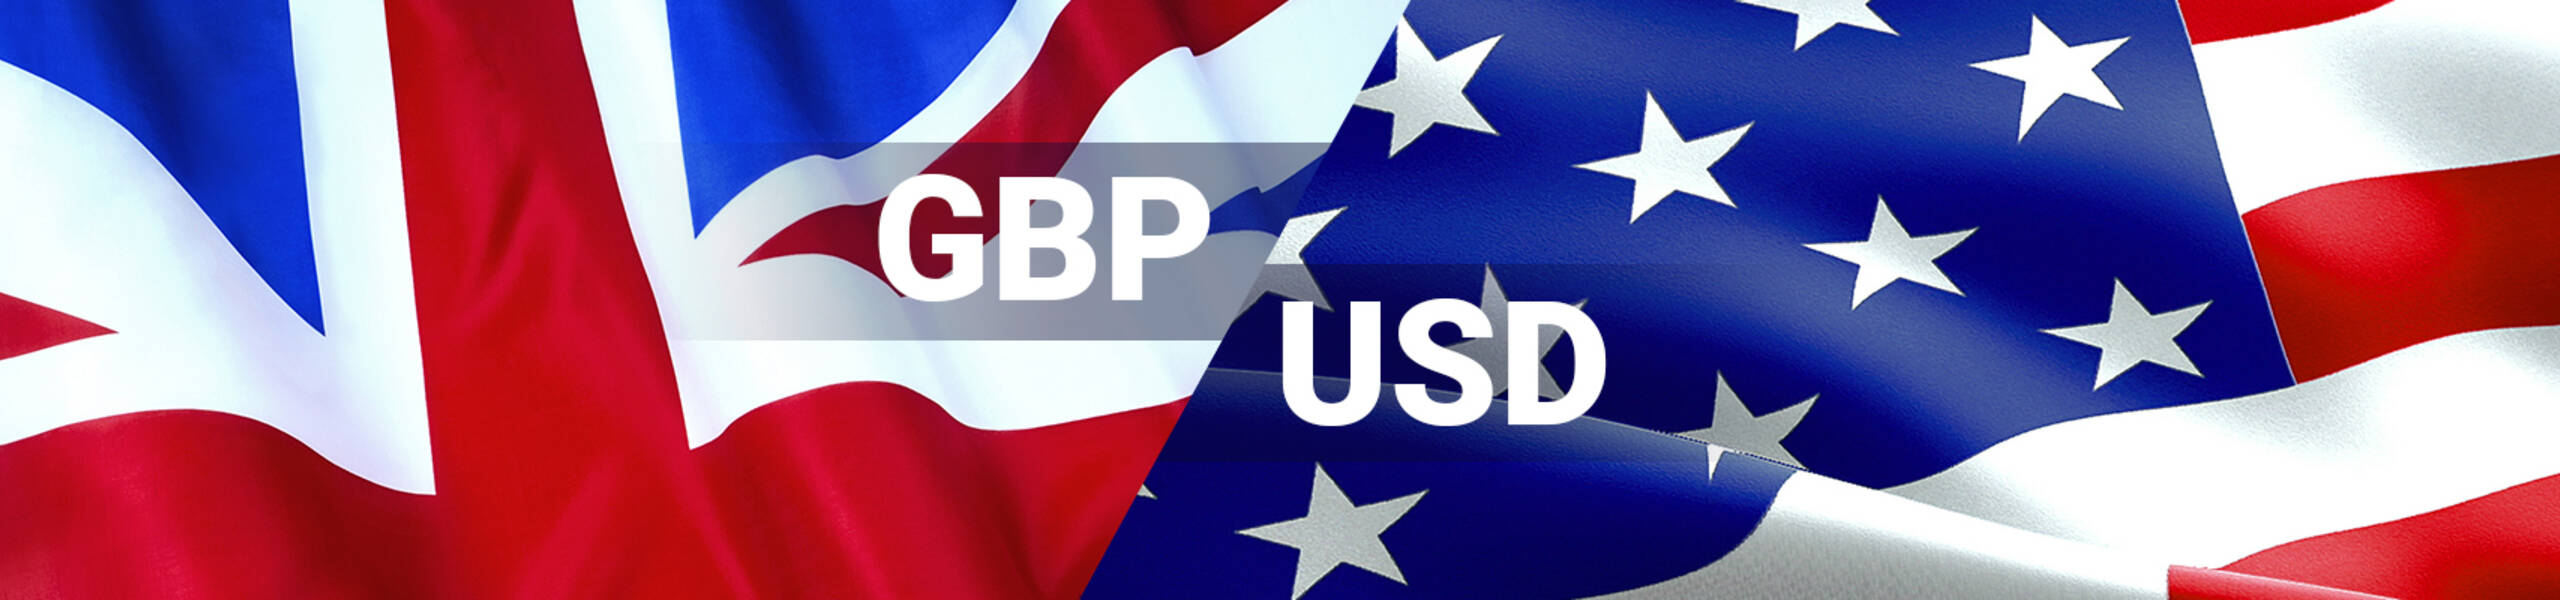 GBP/USD: akankah pound meninggalkan ledge?